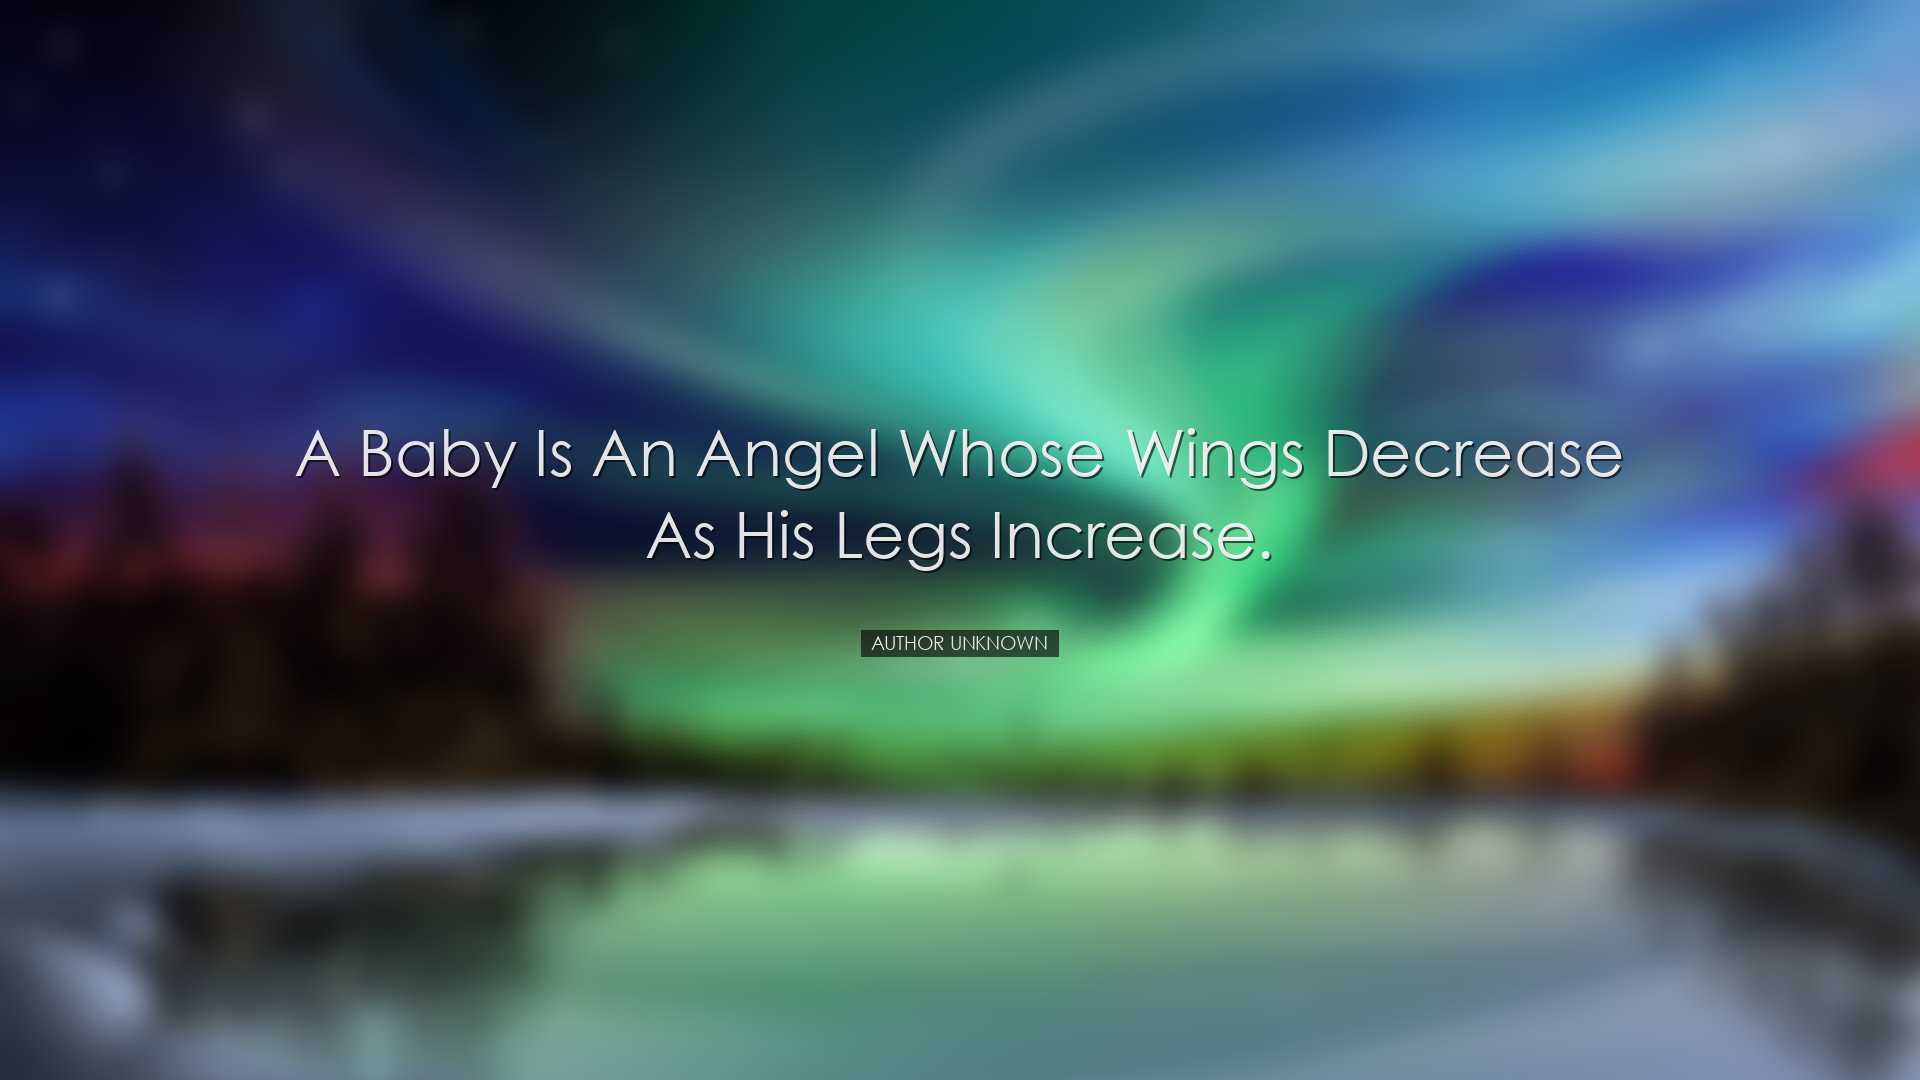 A baby is an angel whose wings decrease as his legs increase. - Au